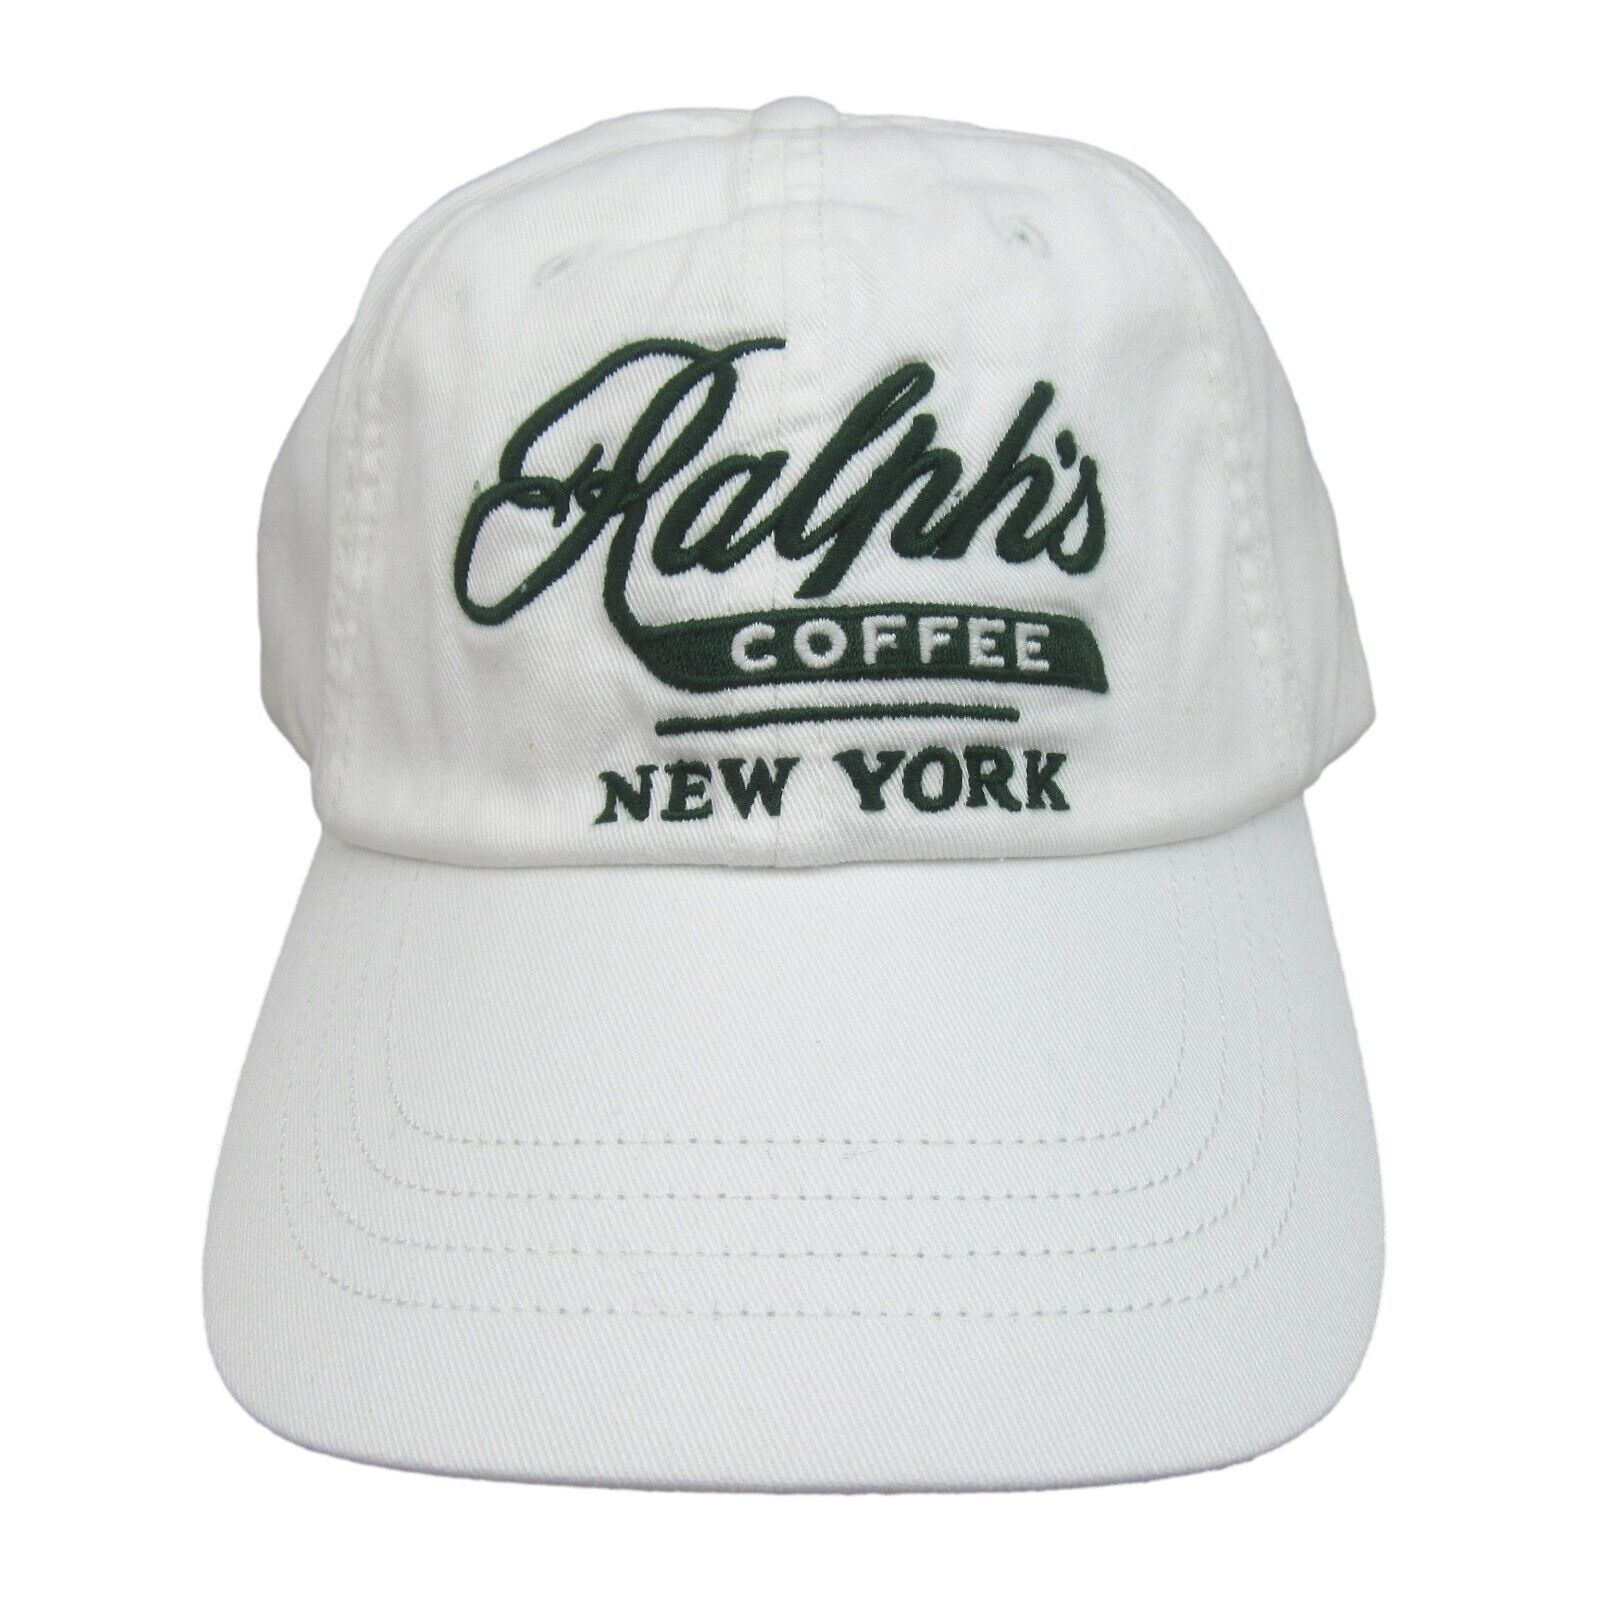 Polo Ralph Lauren Ralph's Coffee New York NYC Baseball Hat Cap White NEW - $54.98